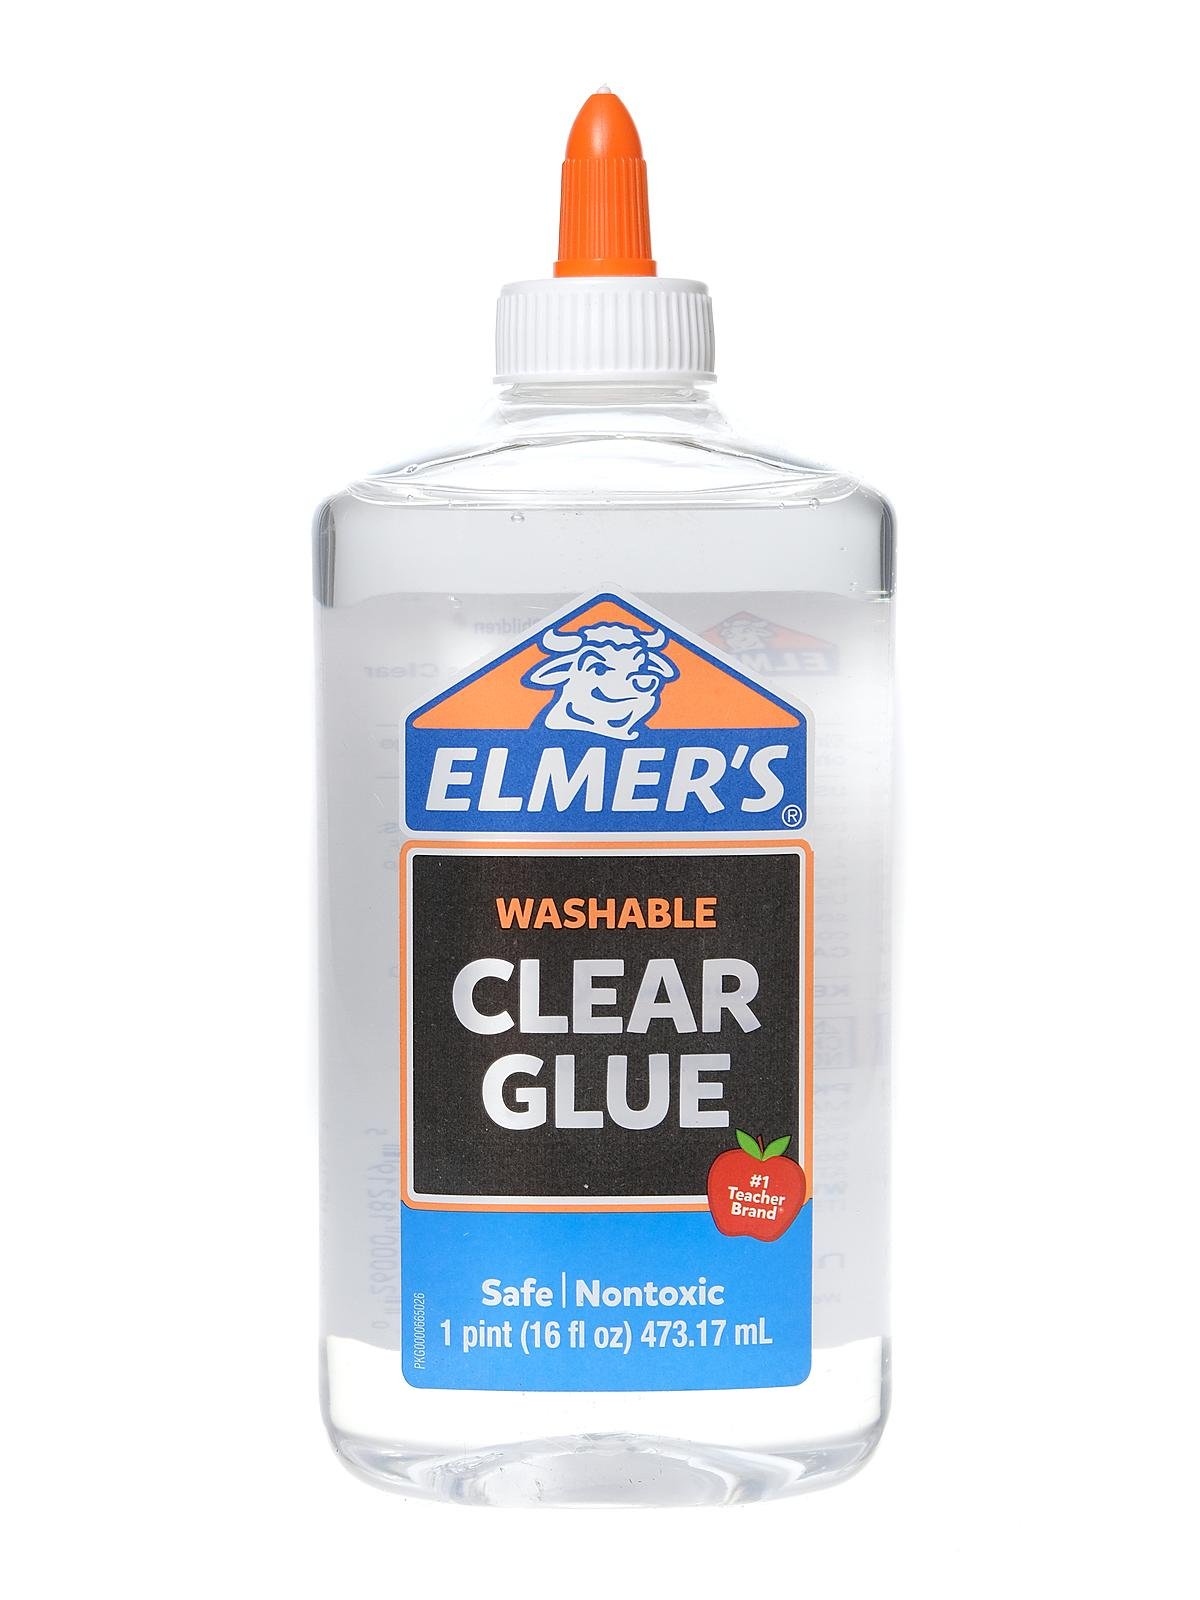  Elmers E301 Washable School Glue